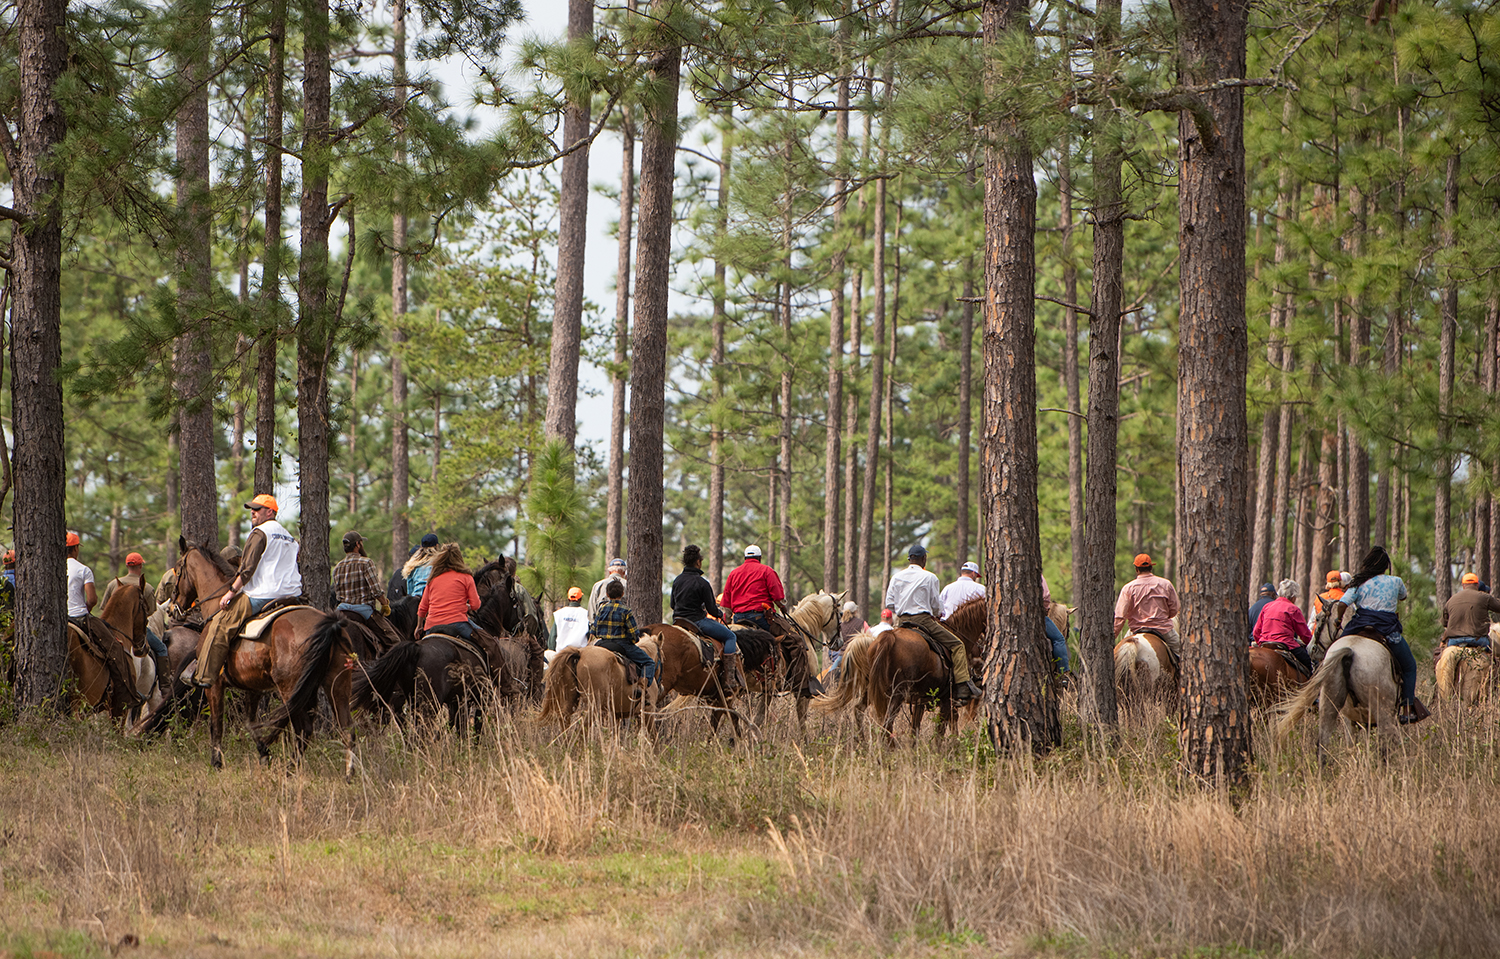 Group on horseback in open pine forest.